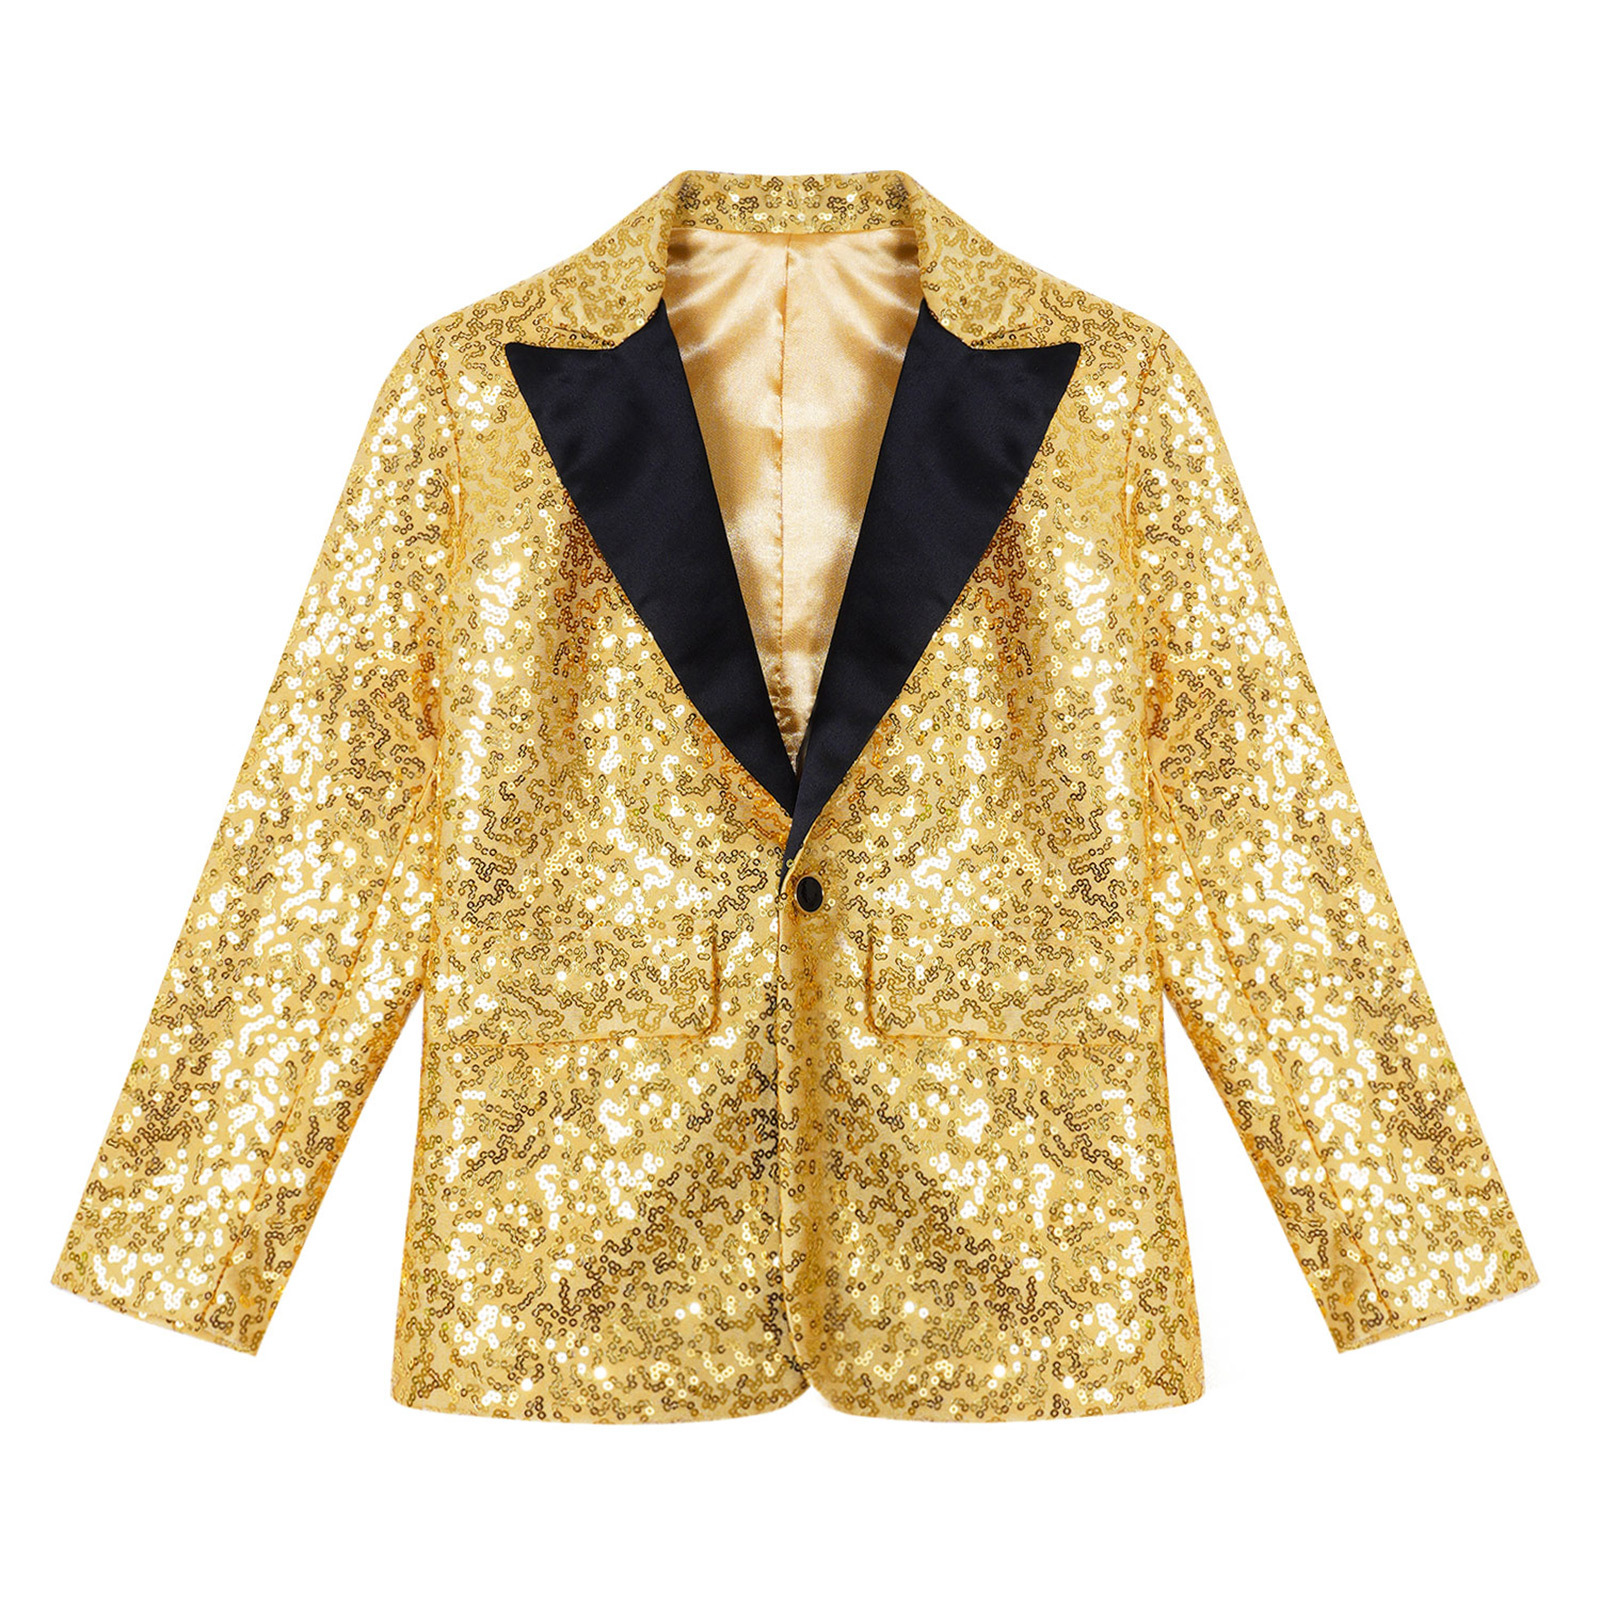 MSemis Kids Boys Shiny Sequin Suit Jacket Party Blazer Dance Tuxedo Costume with Hat,Size 6-16 Gold 12 - image 3 of 6